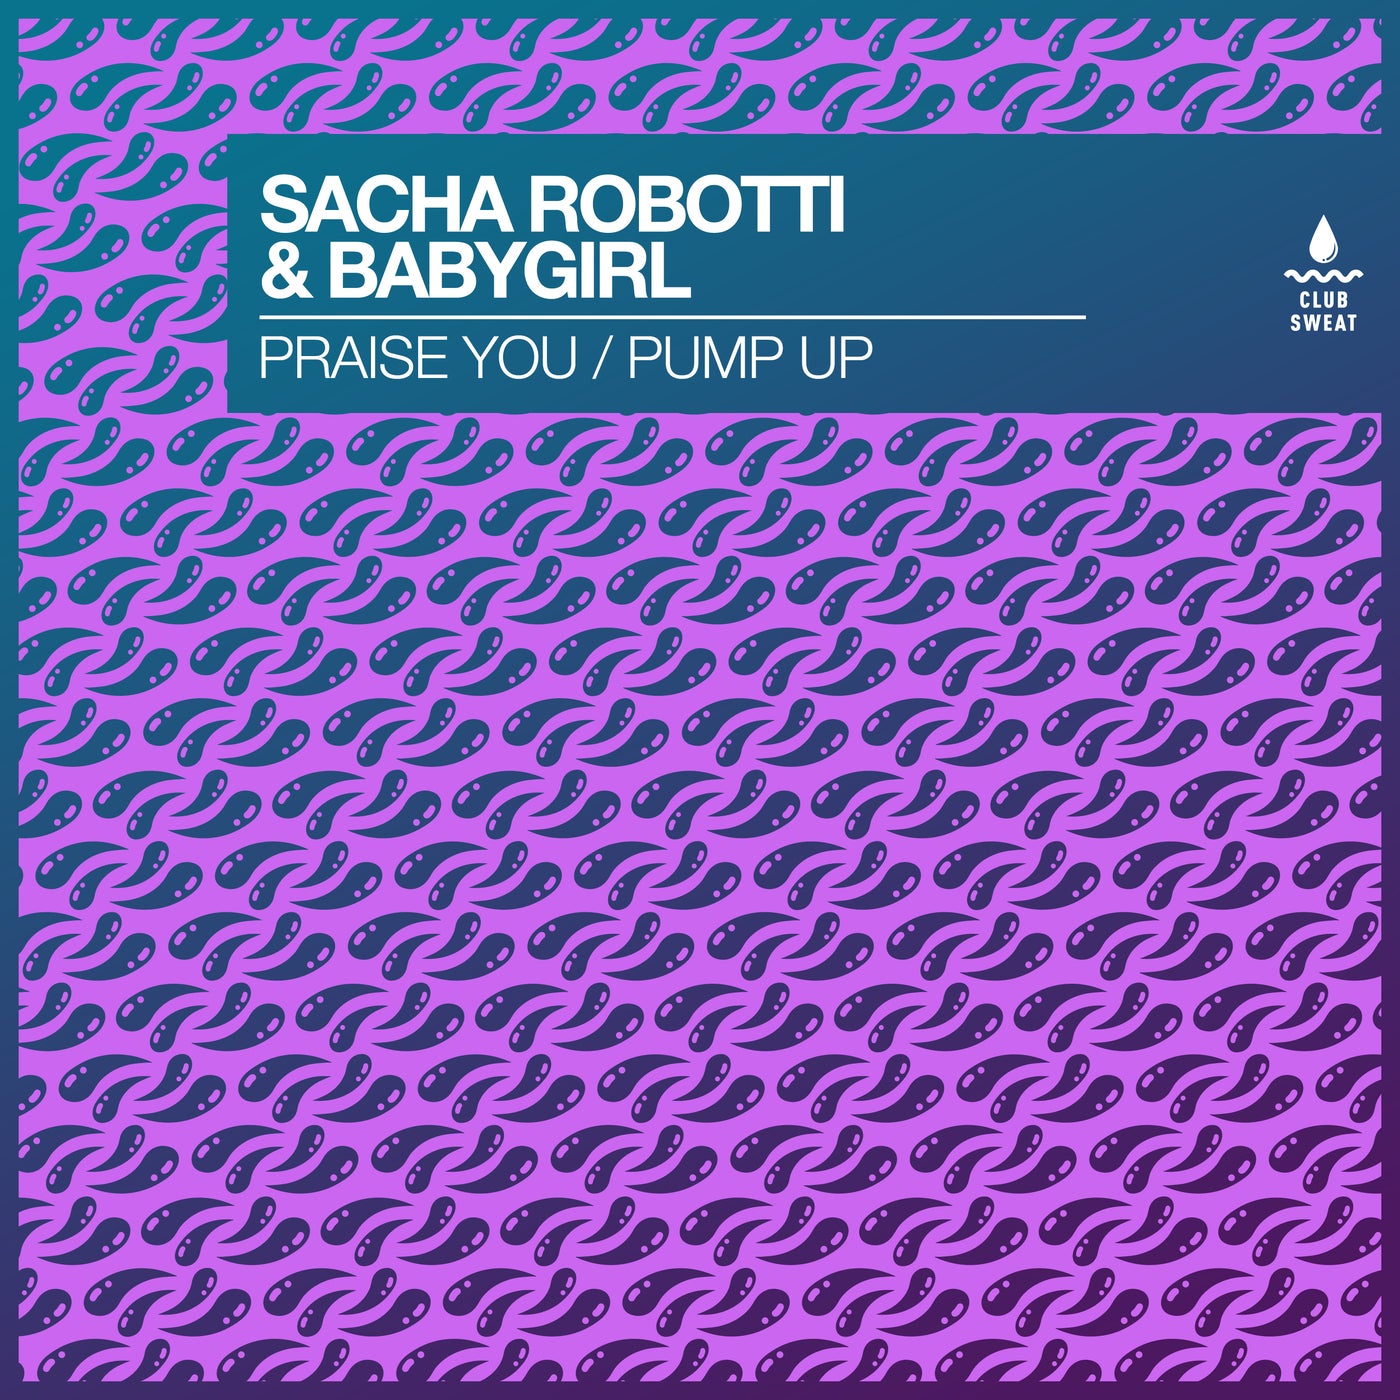 image cover: Sacha Robotti, BabyGirl - Praise You / Pump Up on Club Sweat